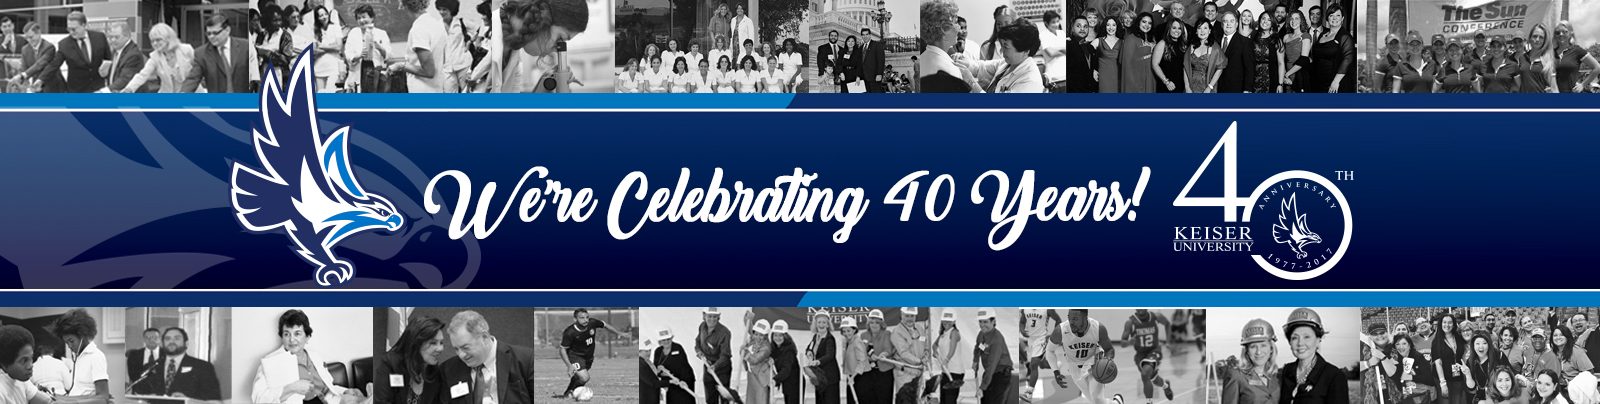 We're Celebrating 40 Years!